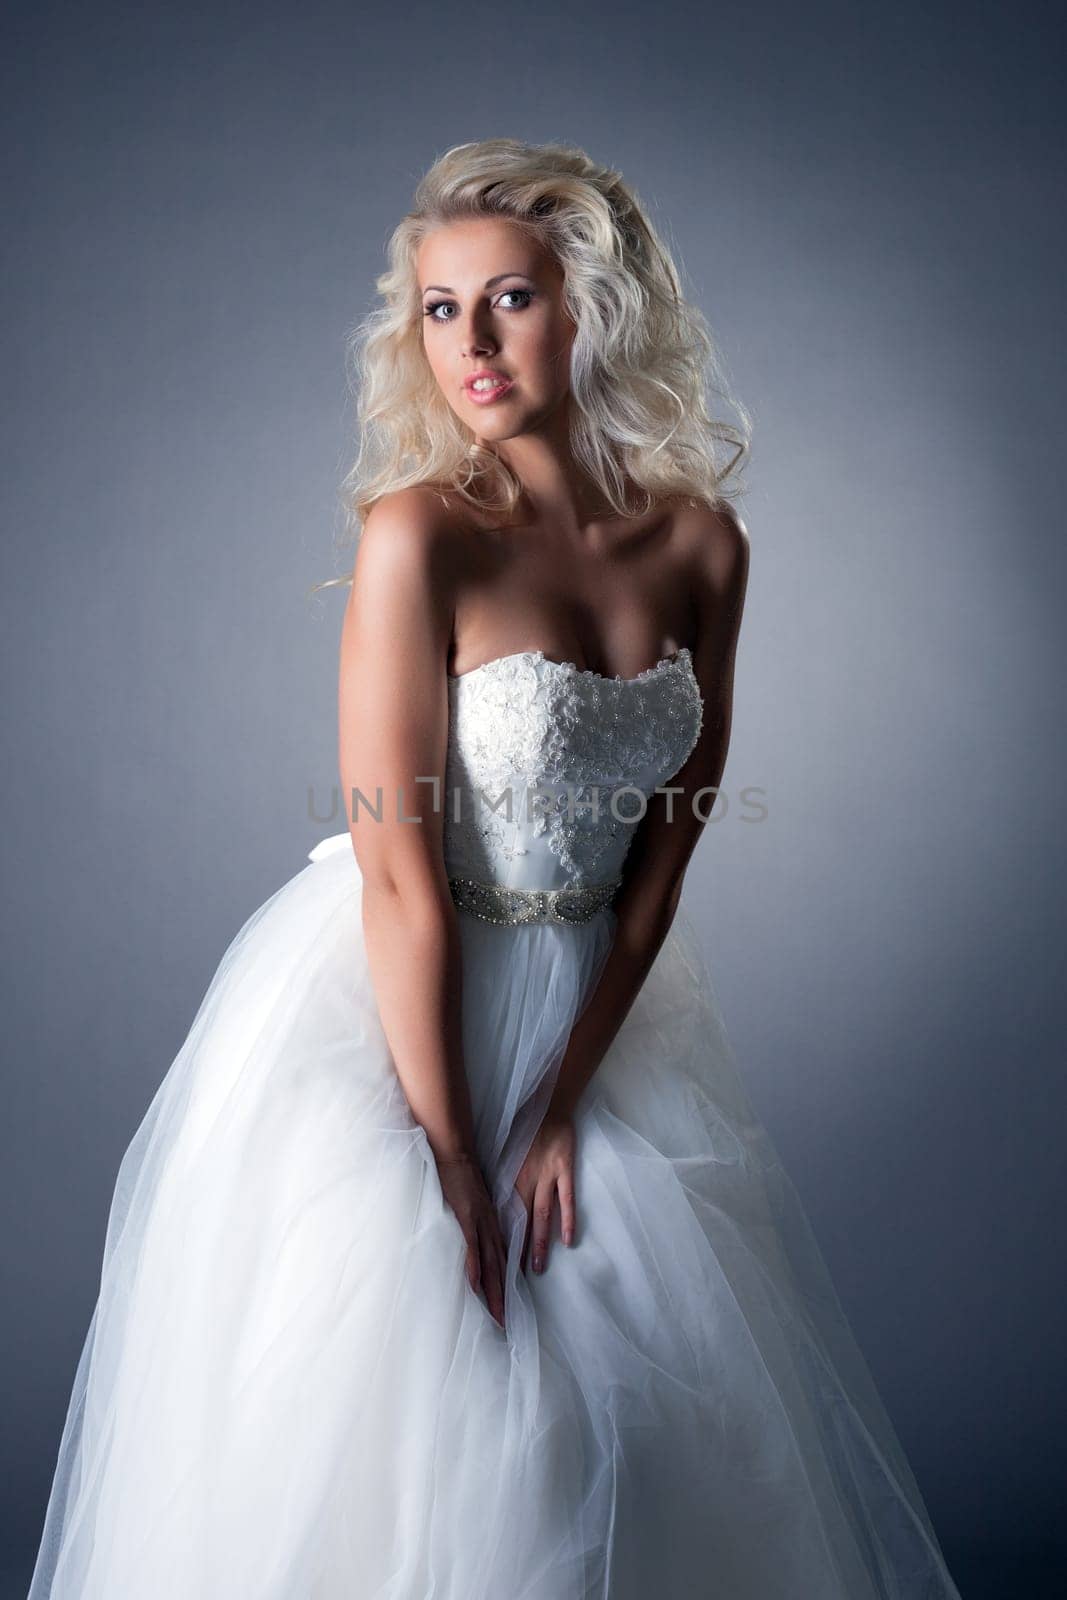 Romantic blonde posing in lush wedding dress by rivertime